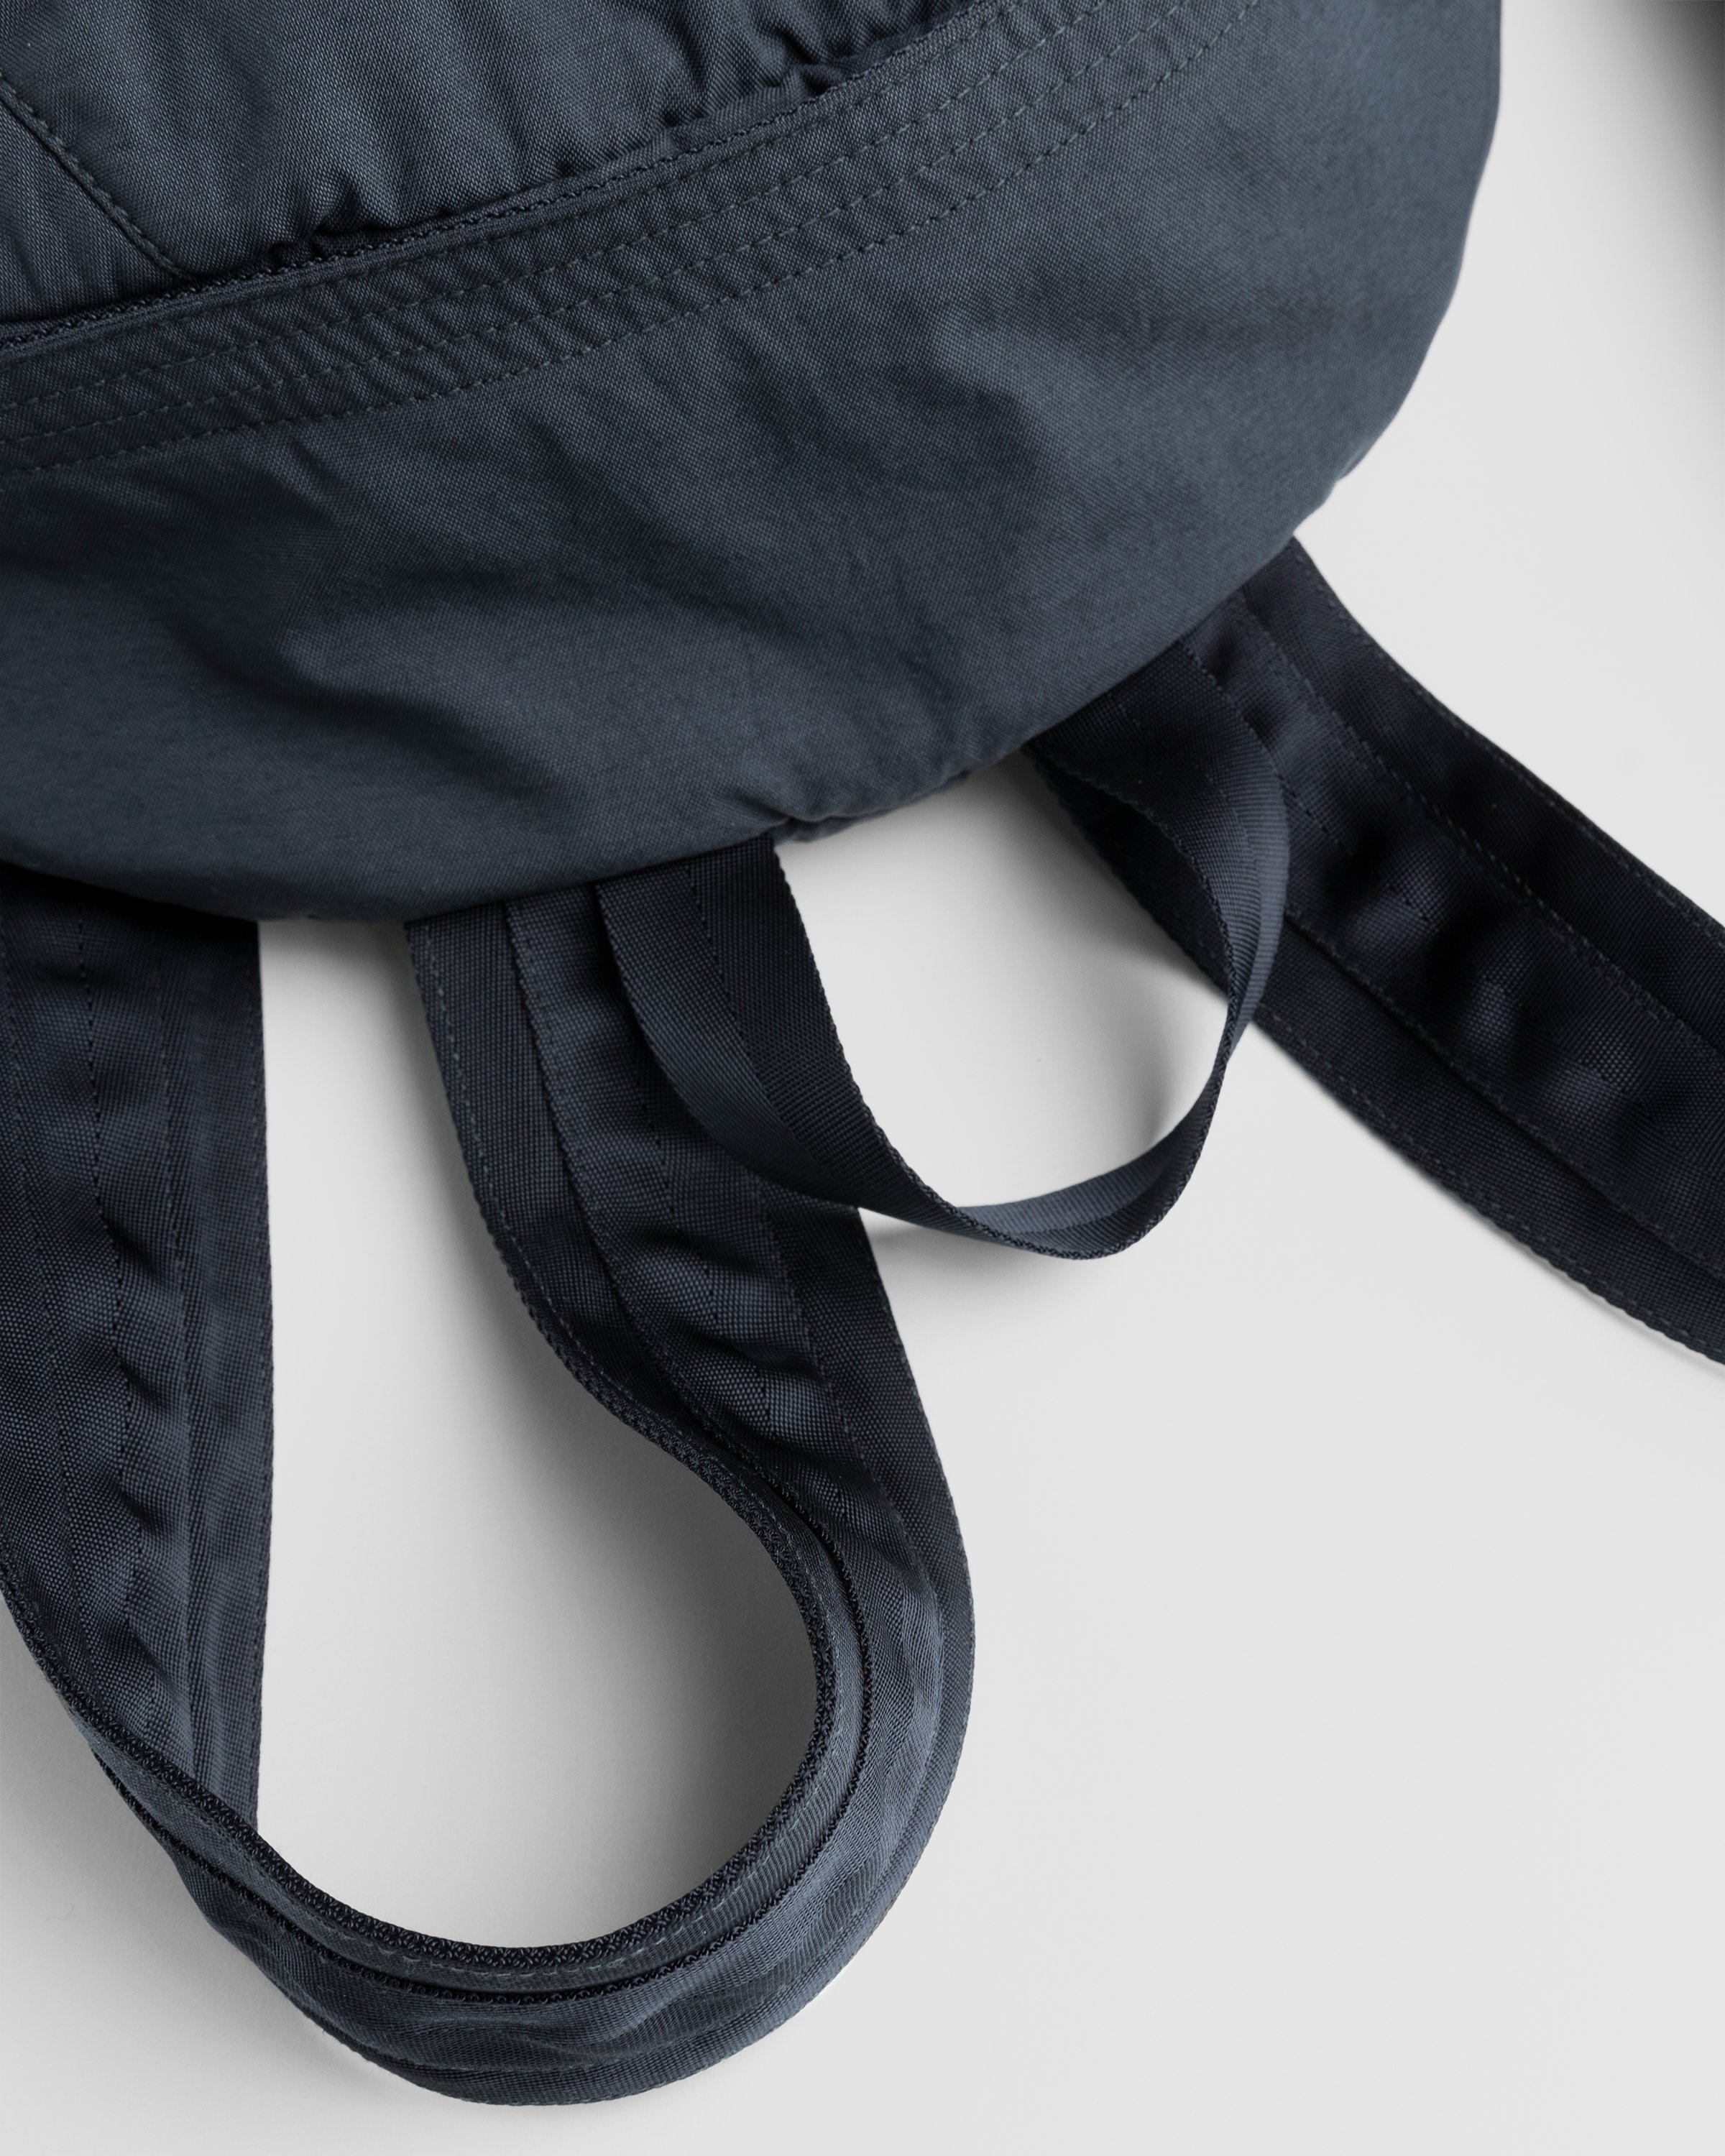 C.P. Company - Taylon P Mixed Backpack Grey - Accessories - Grey - Image 3